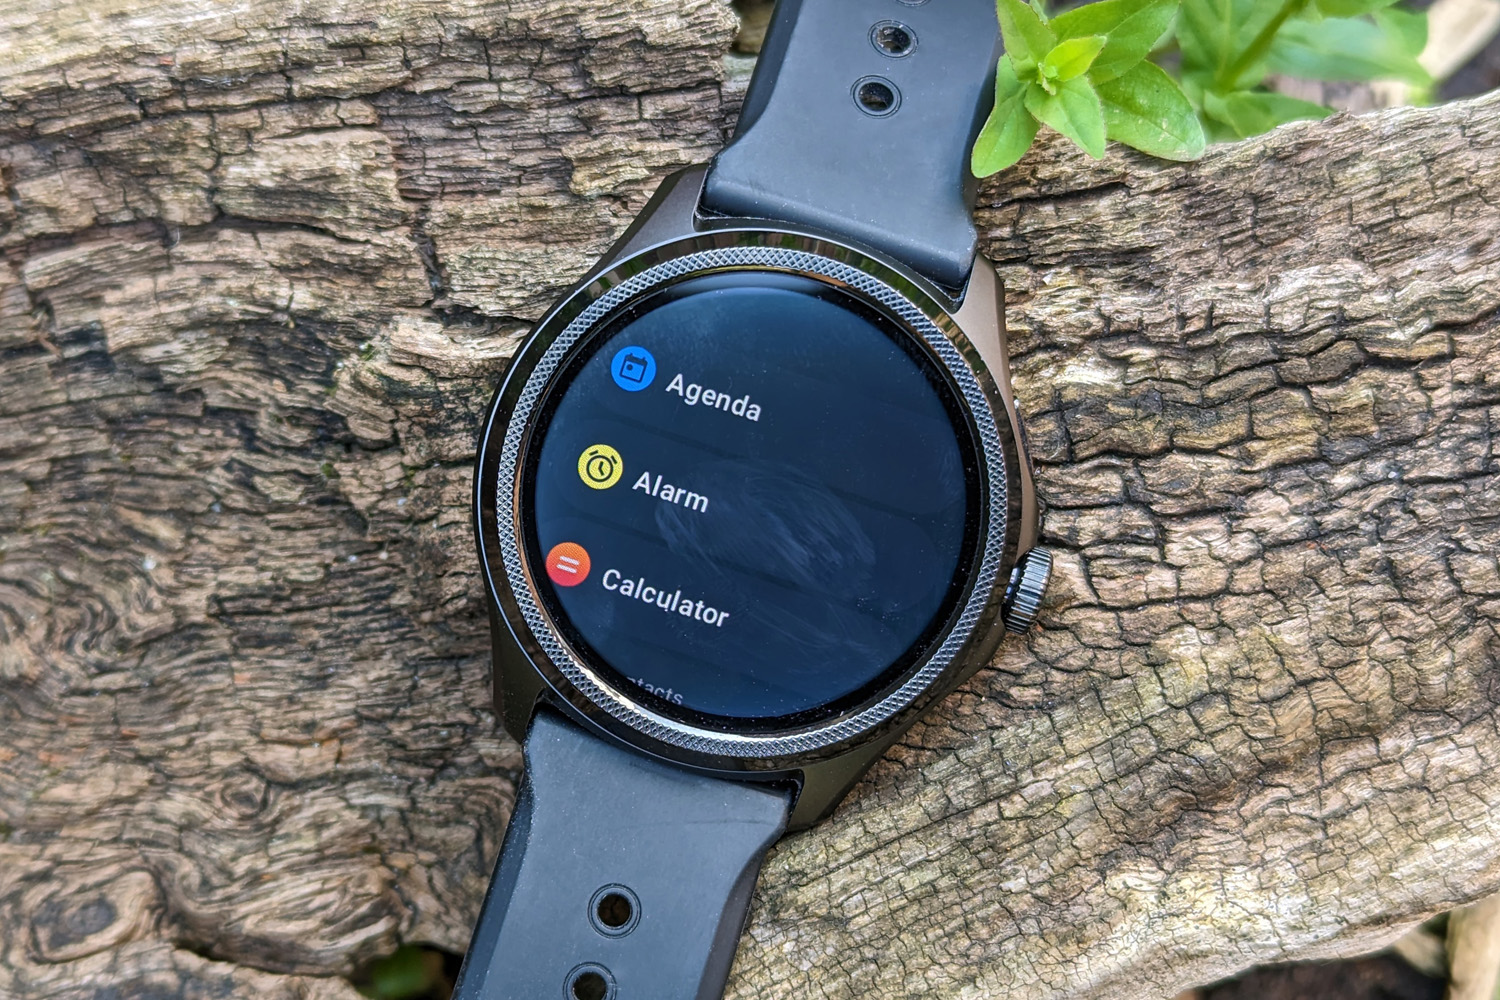 Ticwatch Pro 5 Android Smartwatch for Men Snapdragon W5+ Gen 1 Platform  Wear OS Smart Watch 80 Hrs Long Battery, Black 